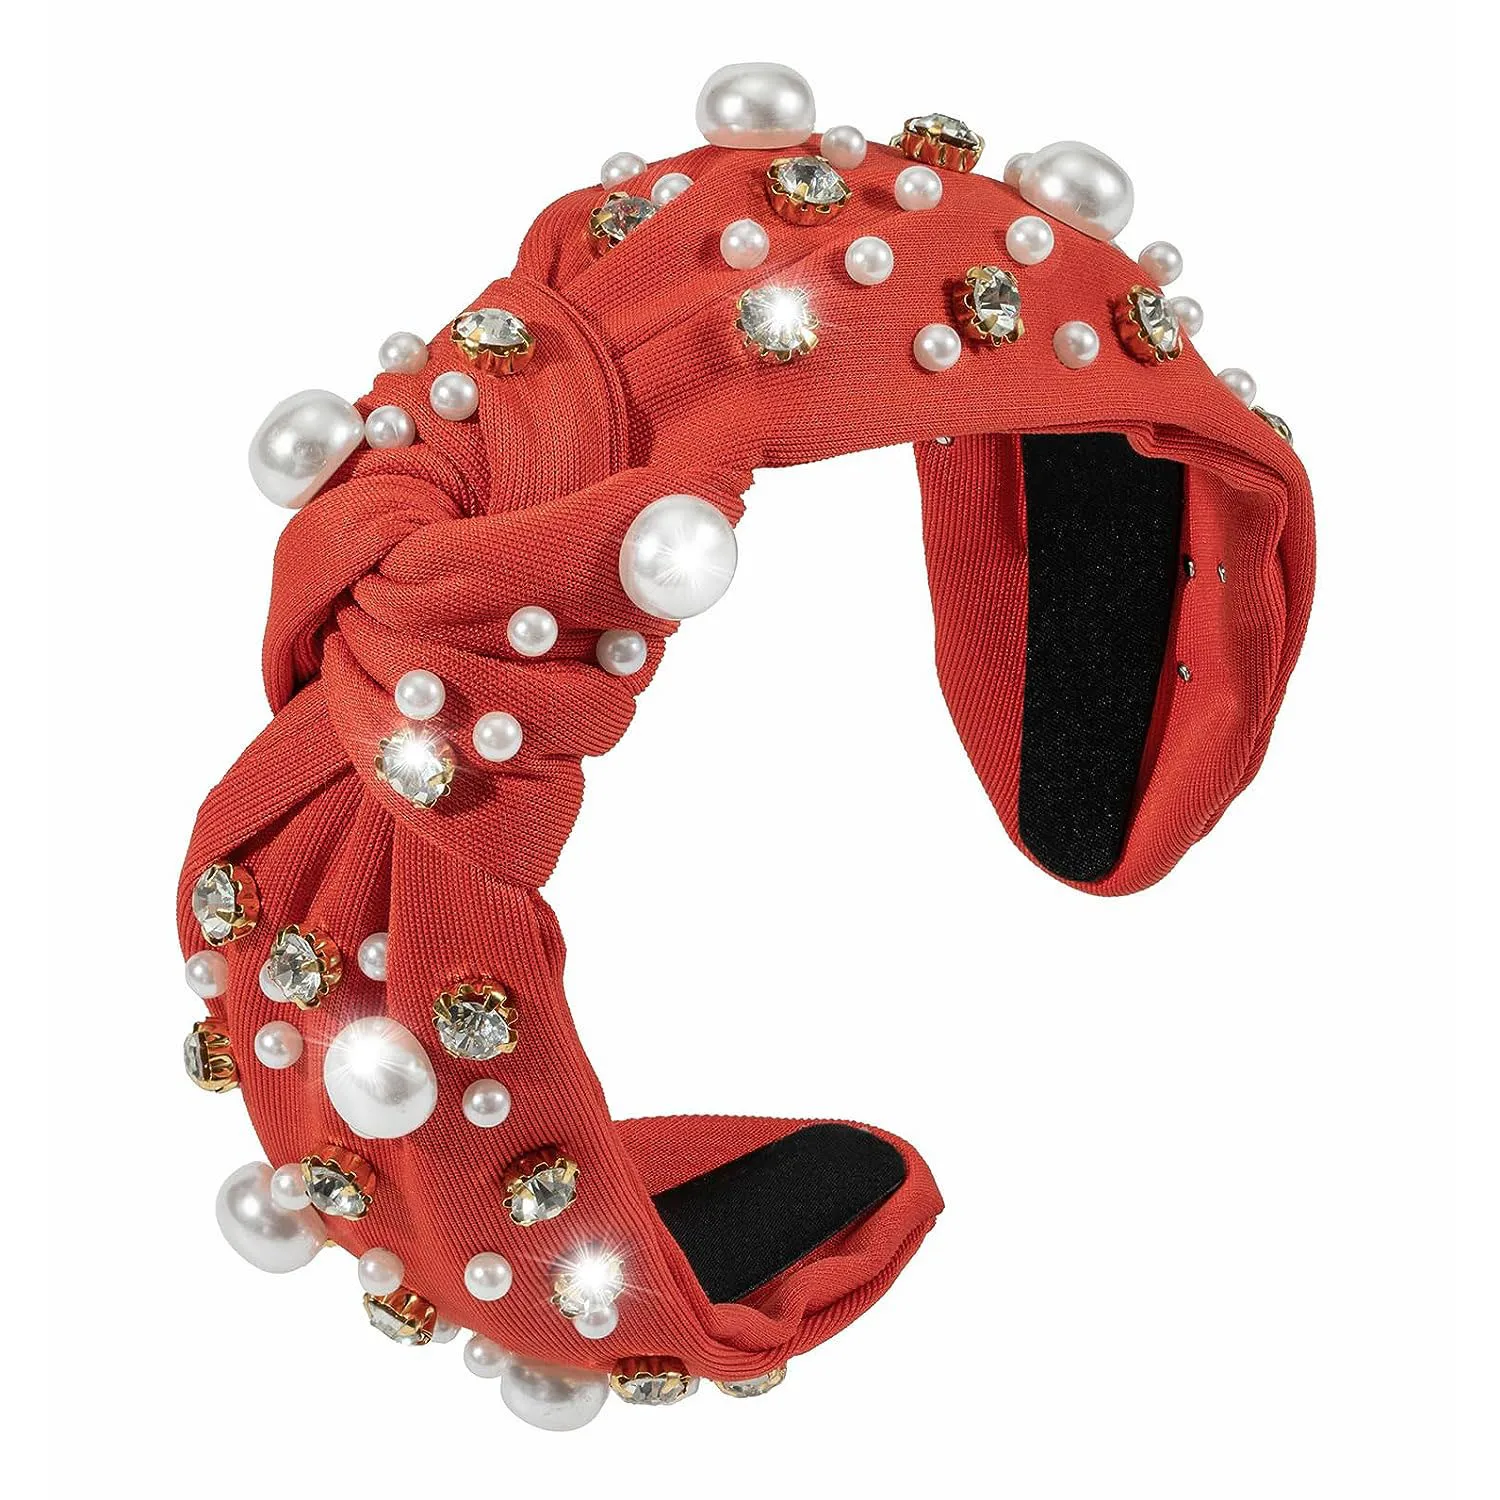 Knotted Jeweled Headband Pearl Knotted Jeweled Red Headband for Women Pearl Rhinestone Crystal Embellished Hairband Fashion